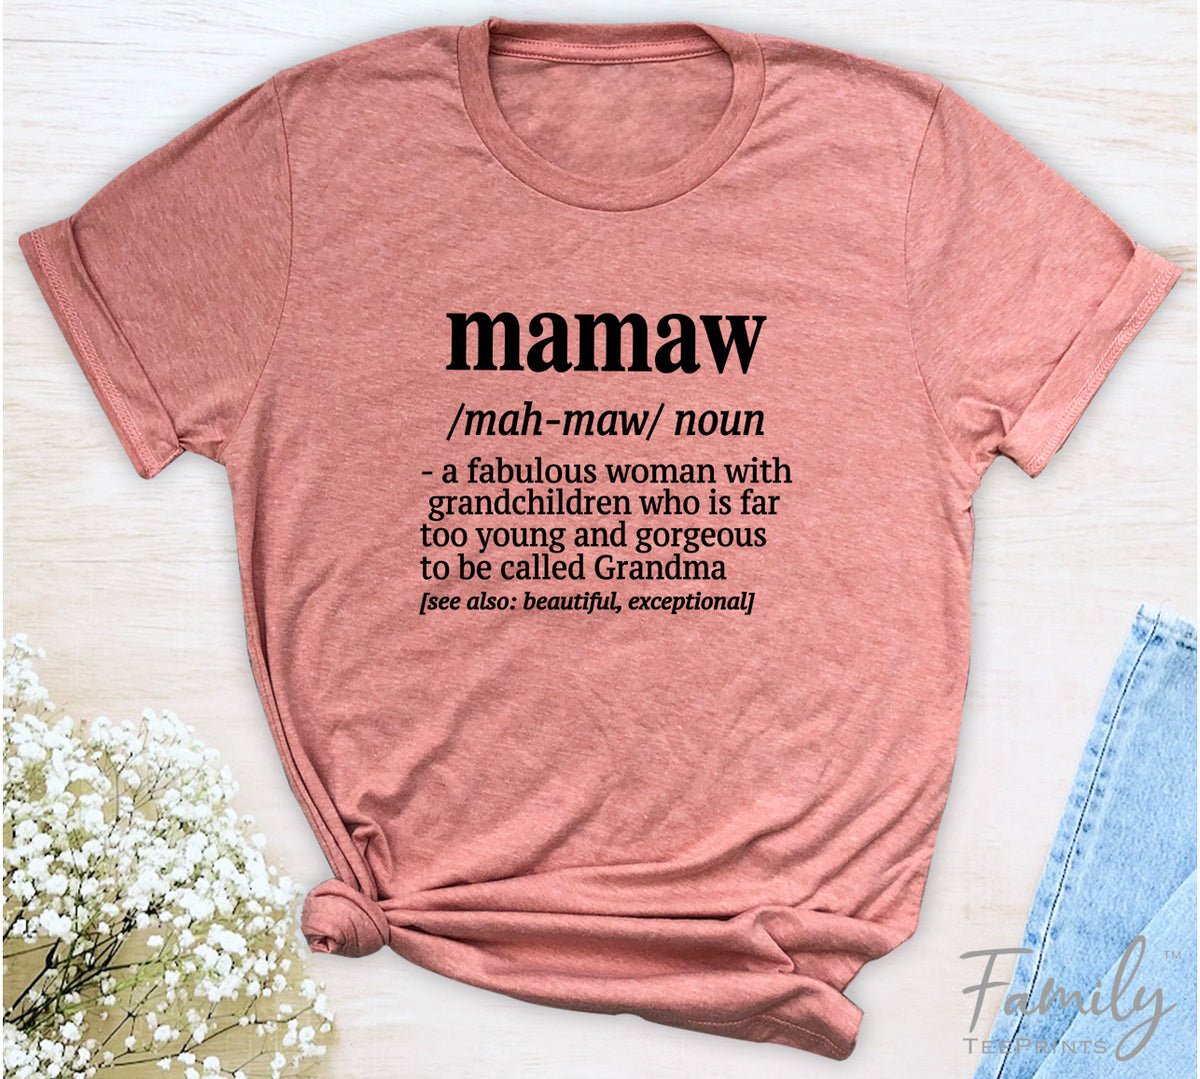 Mamaw A Fabulous Woman With Grandchildren... - Unisex T-shirt - Mamaw Shirt - Gift for Mamaw - familyteeprints